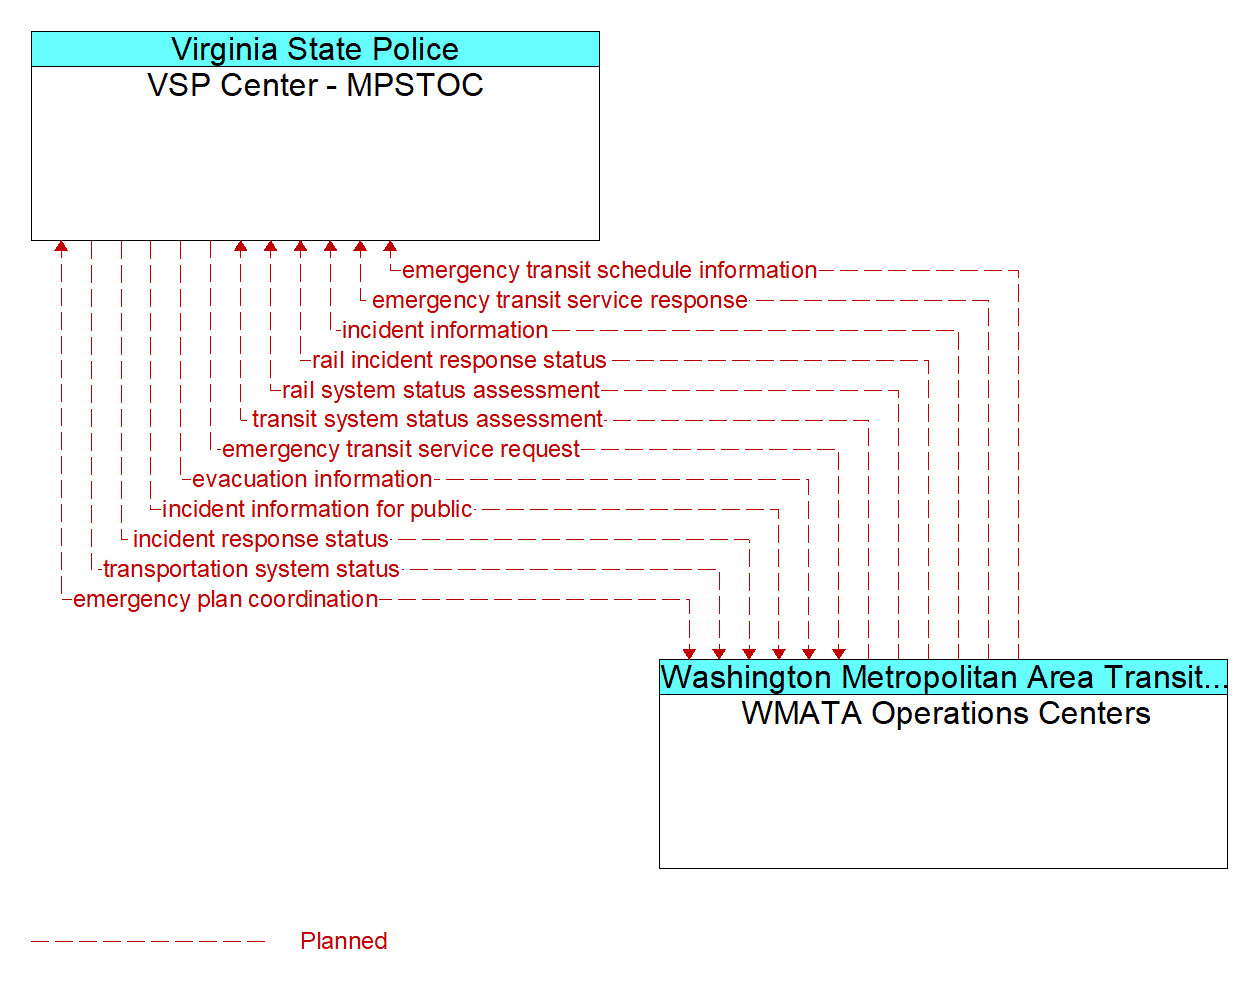 Architecture Flow Diagram: WMATA Operations Centers <--> VSP Center - MPSTOC